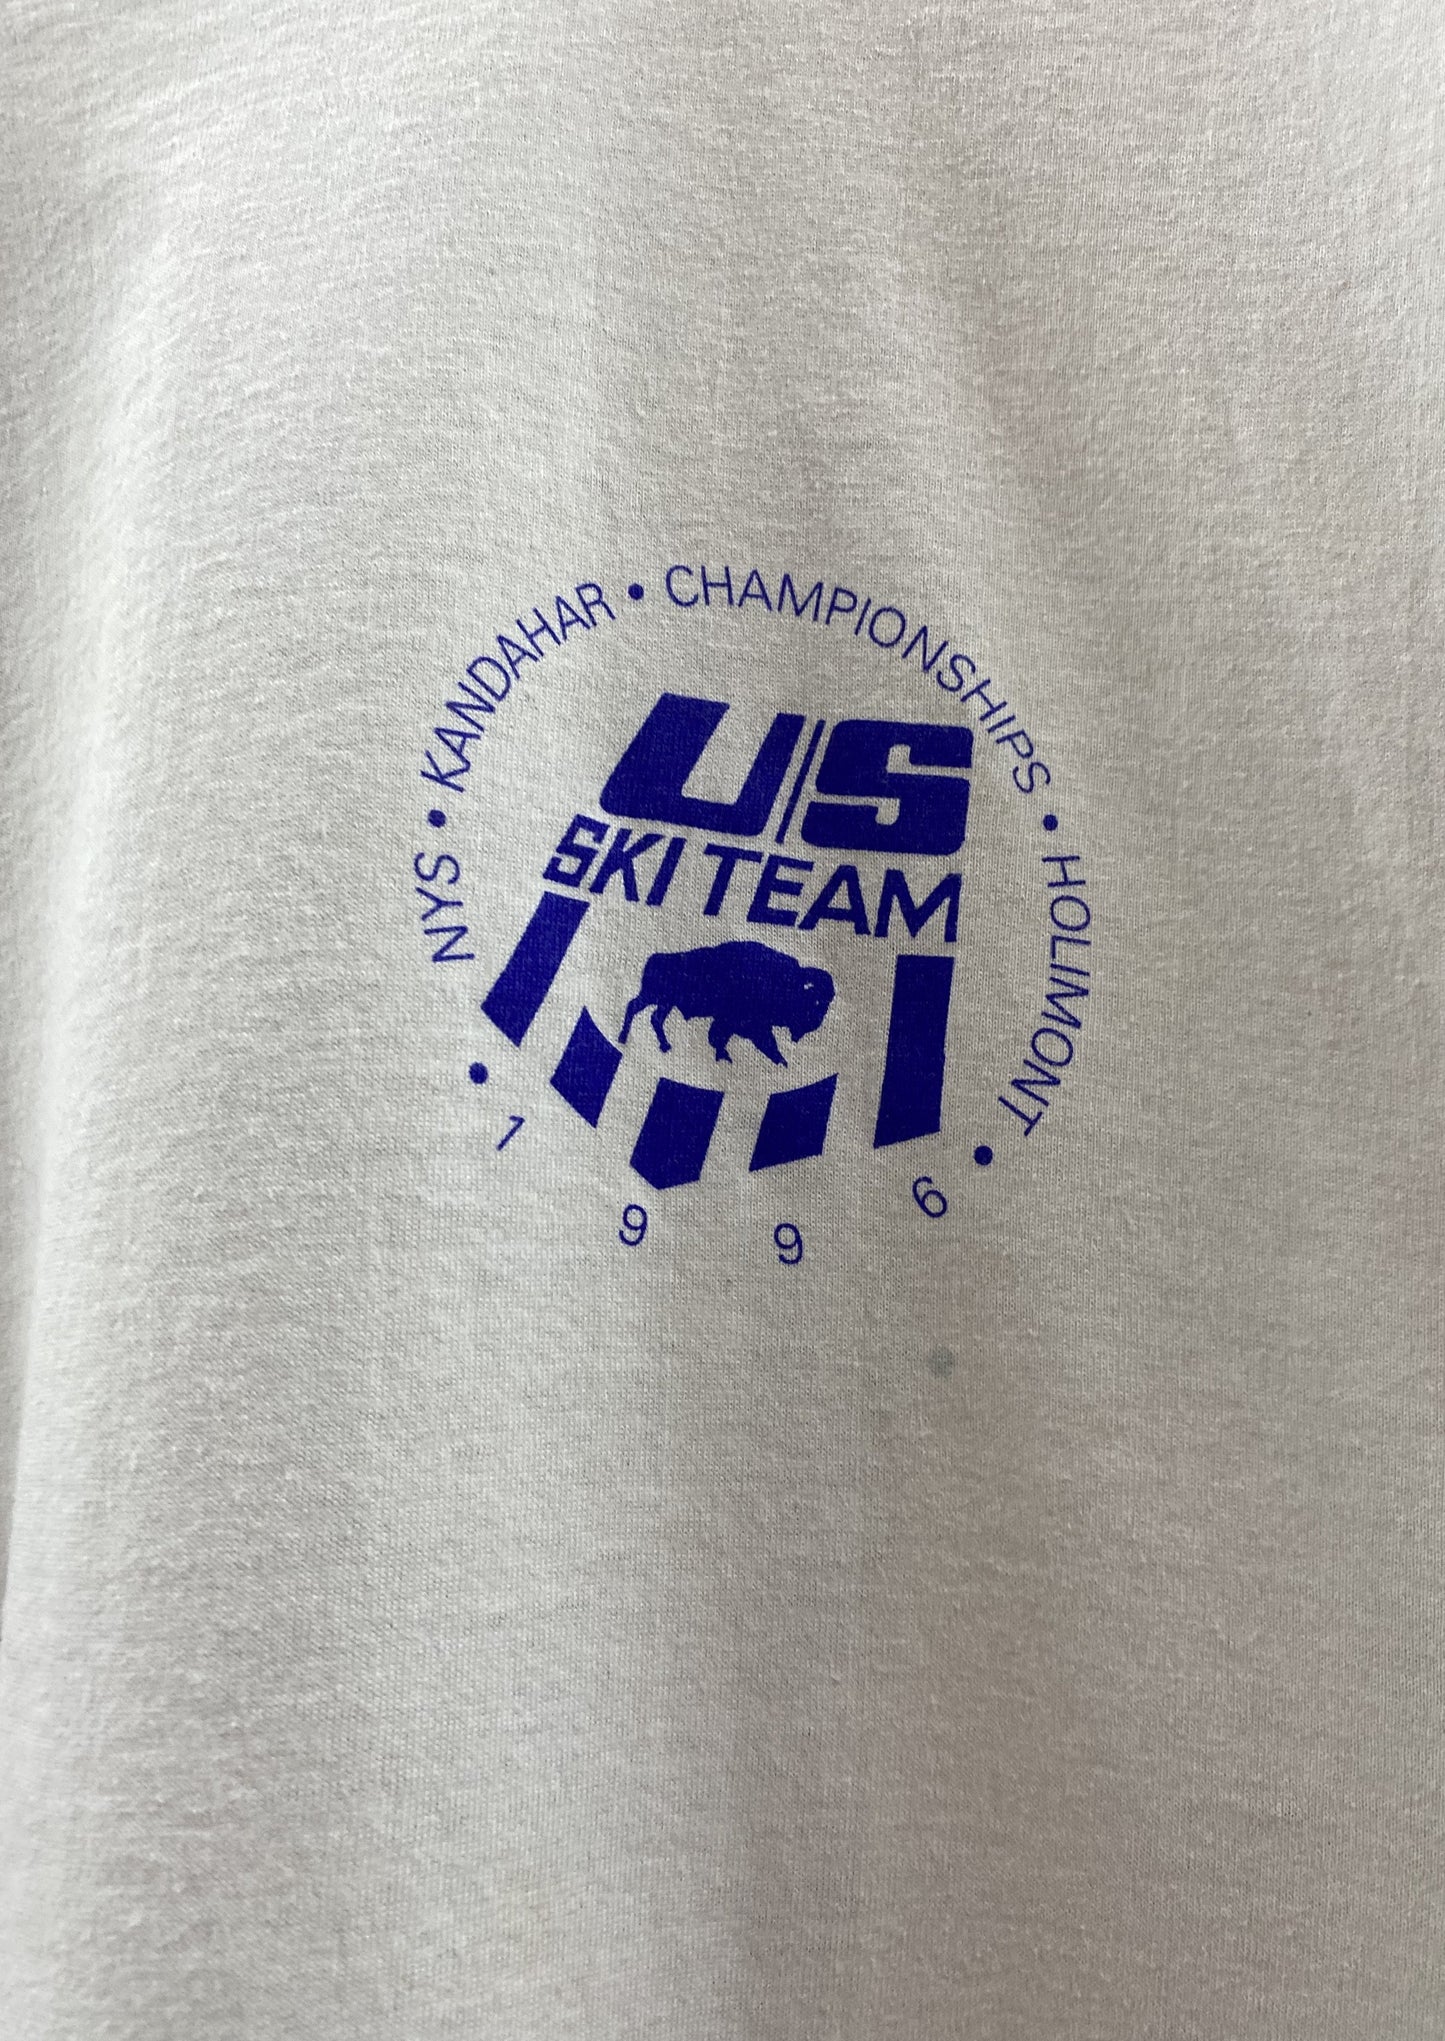 Load image into Gallery viewer, 1996 NYS Kandahar Ski Championship T-Shirt (4877684506704)
